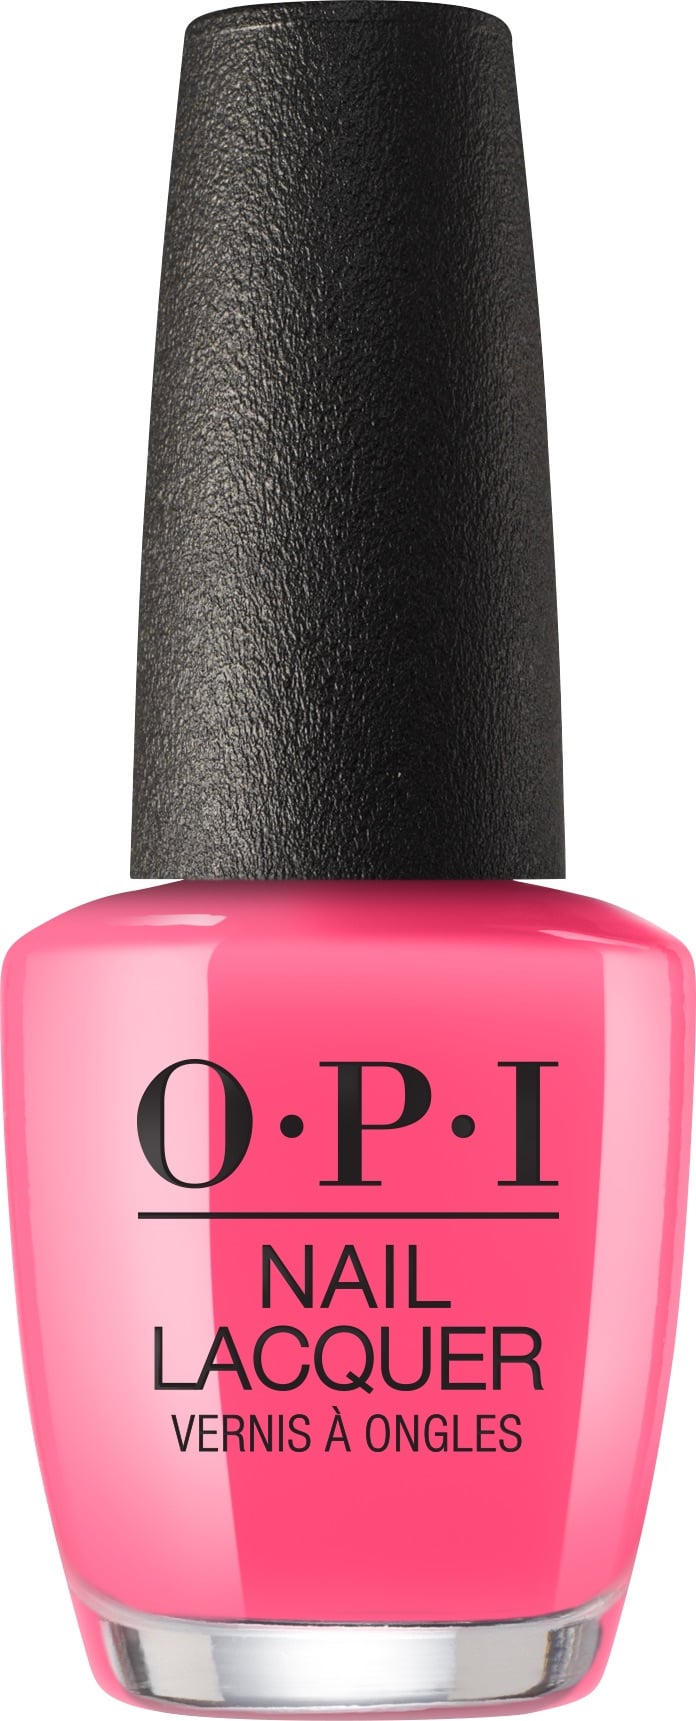 OPI Nail Lacquer in VIPink Passes | Neon Nail Polish For Summer ...